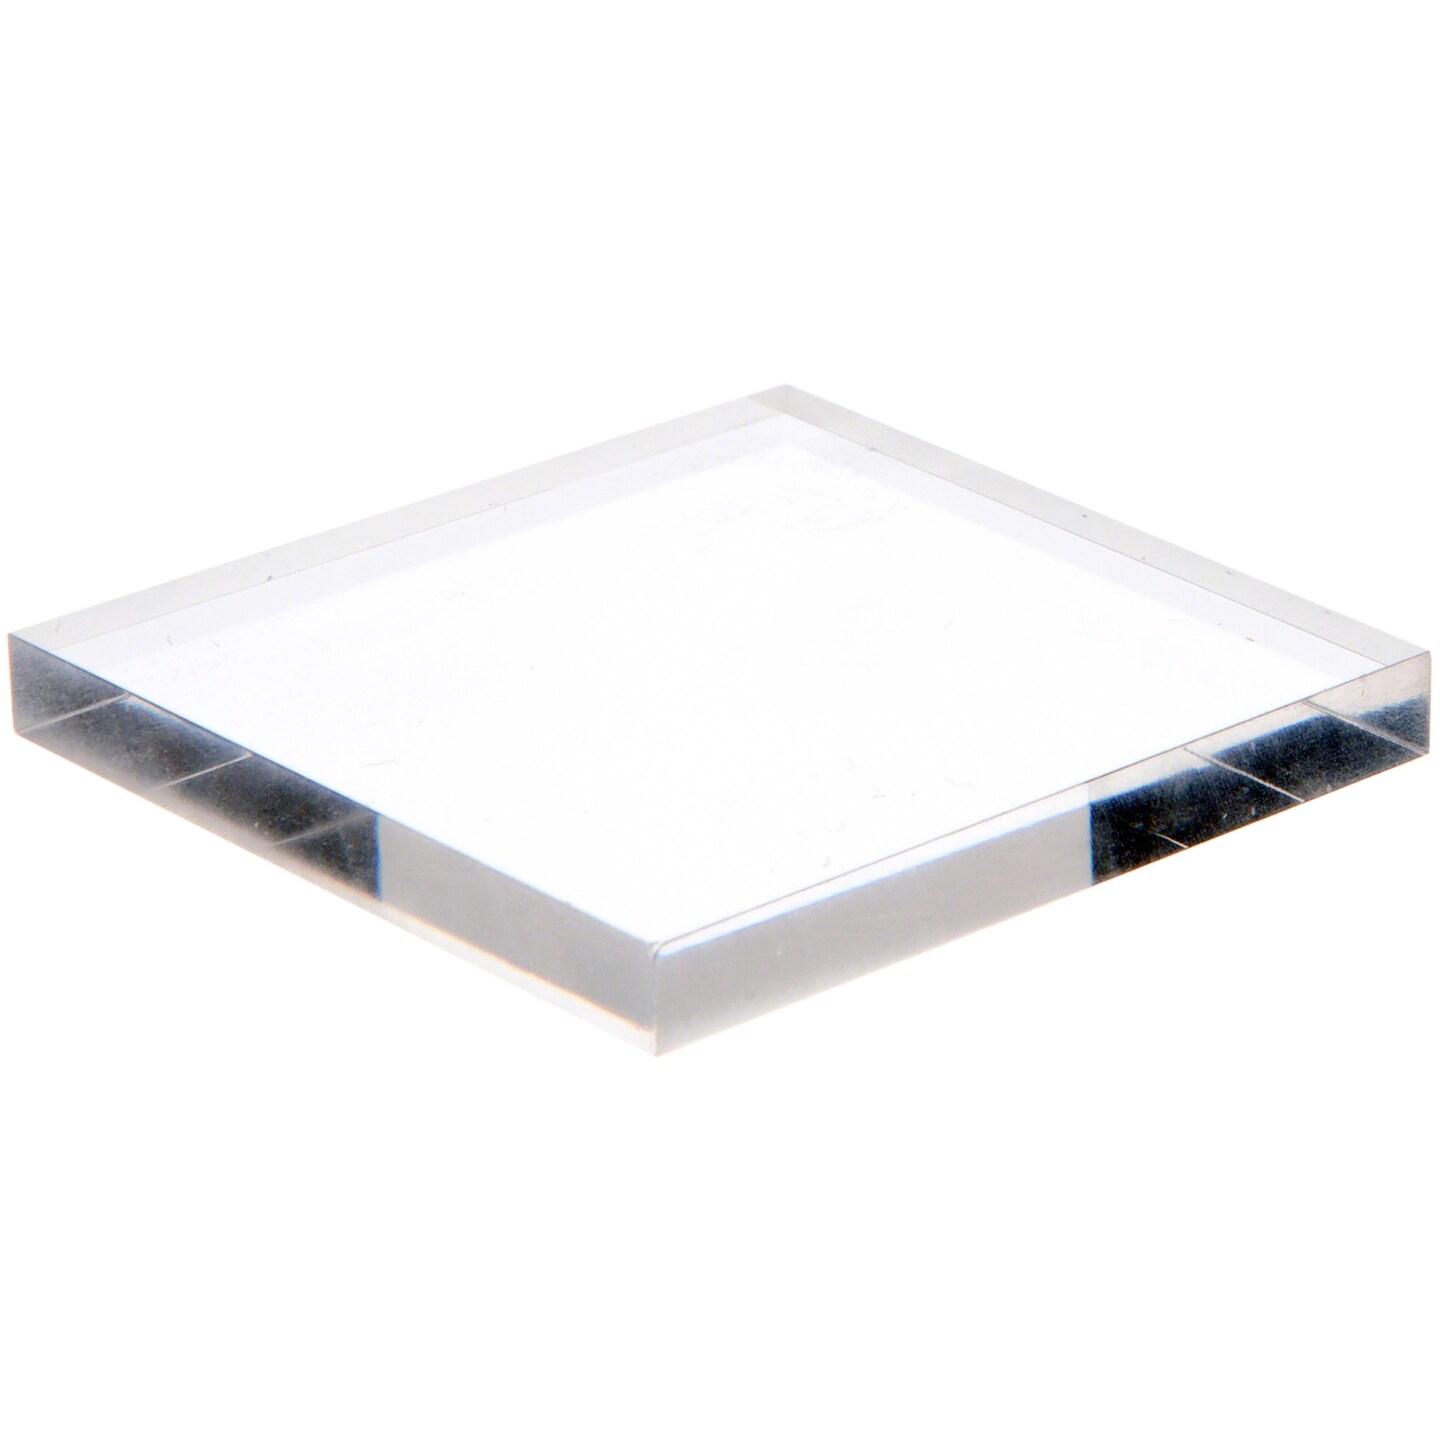 Plymor Clear Acrylic Square Polished Edge Display Base, 2&#x22; W x 2&#x22; D x 0.25&#x22; H